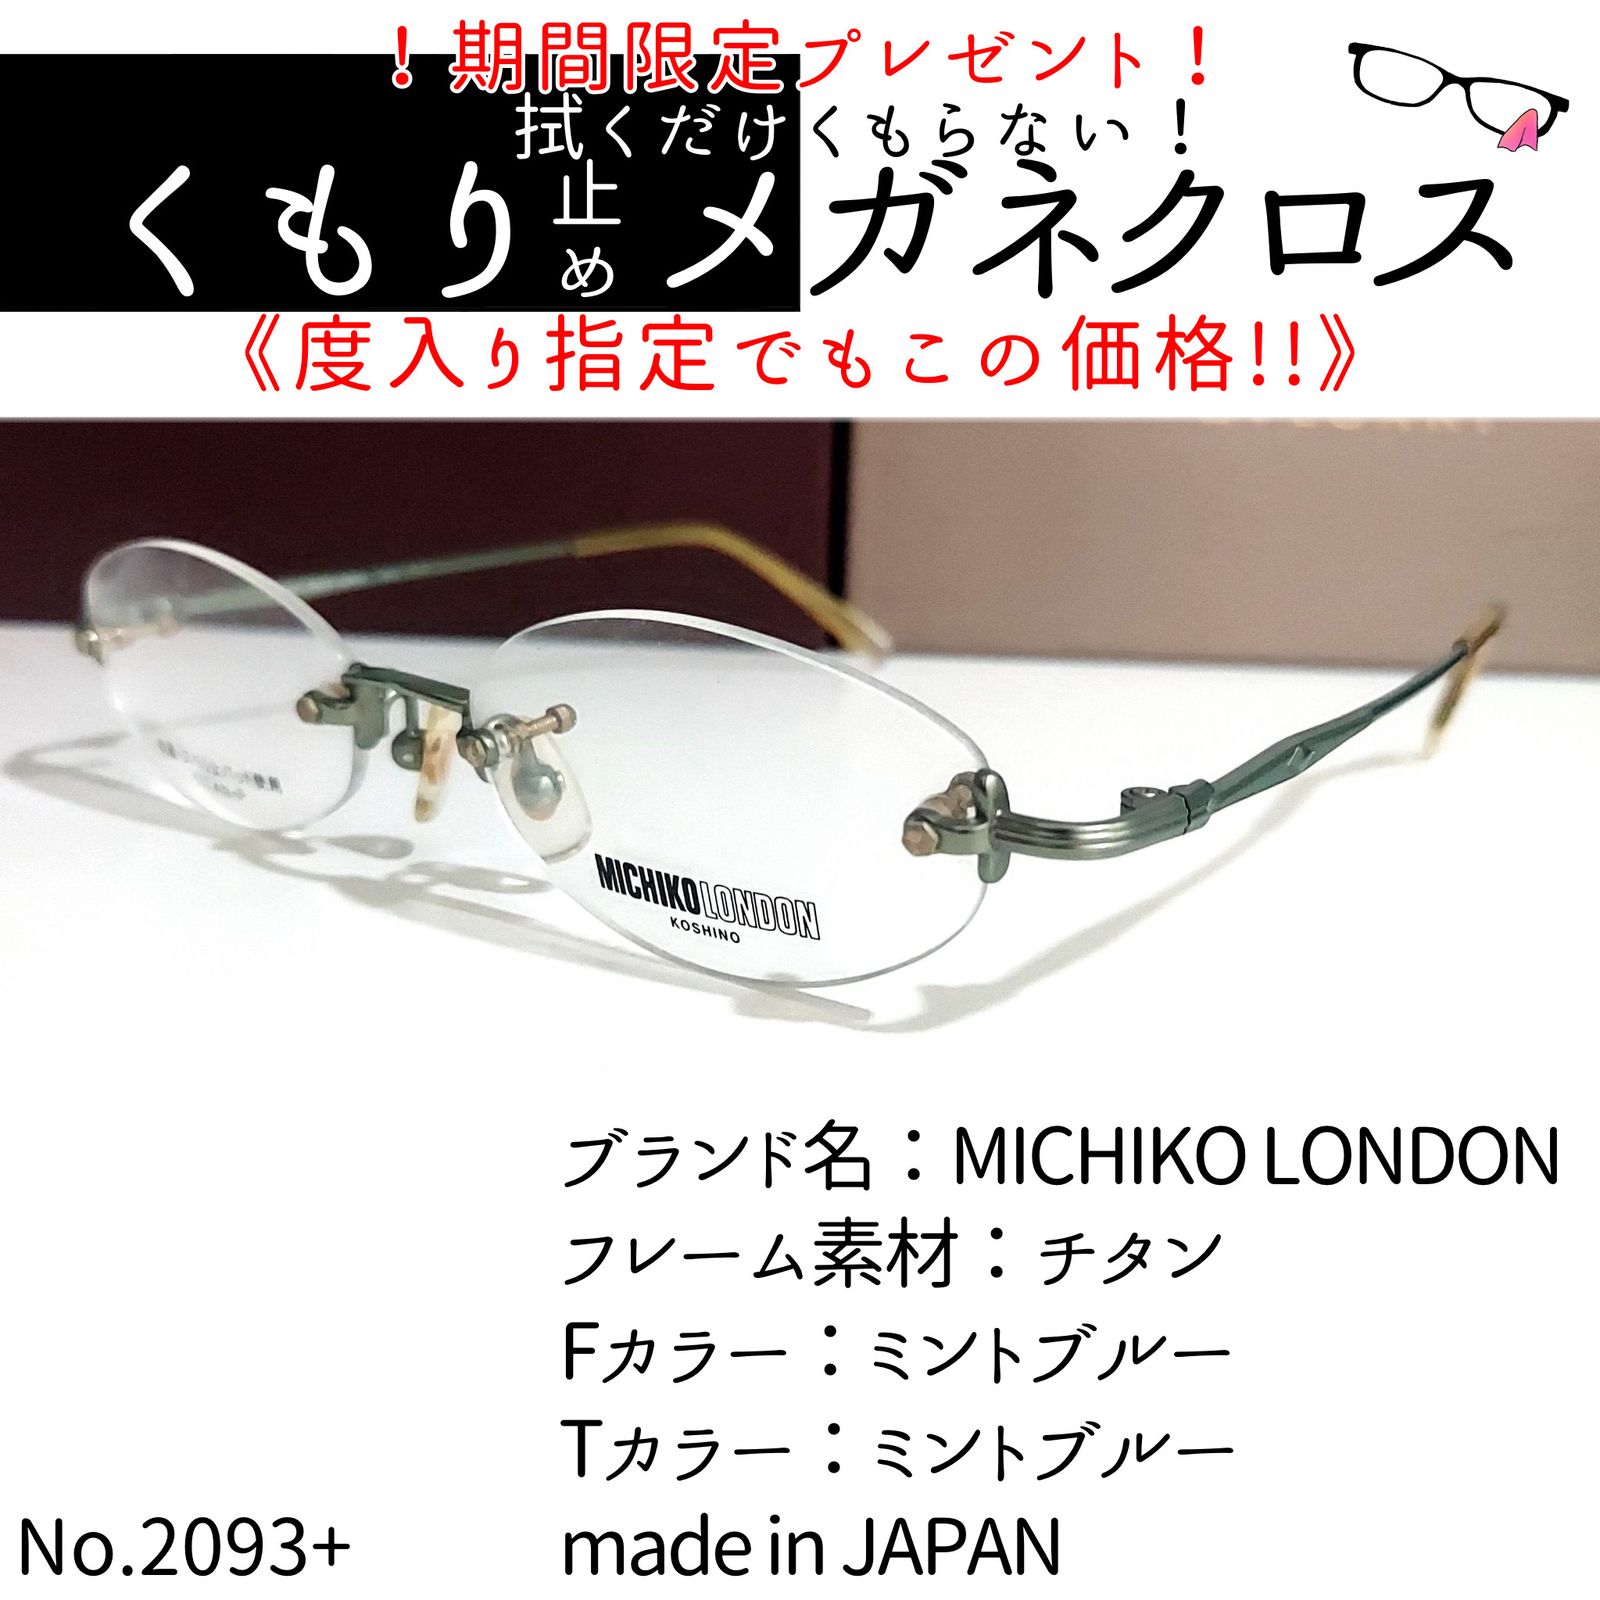 No.2093+メガネ MICHIKO LONDON【度数入り込み価格】 - スッキリ生活